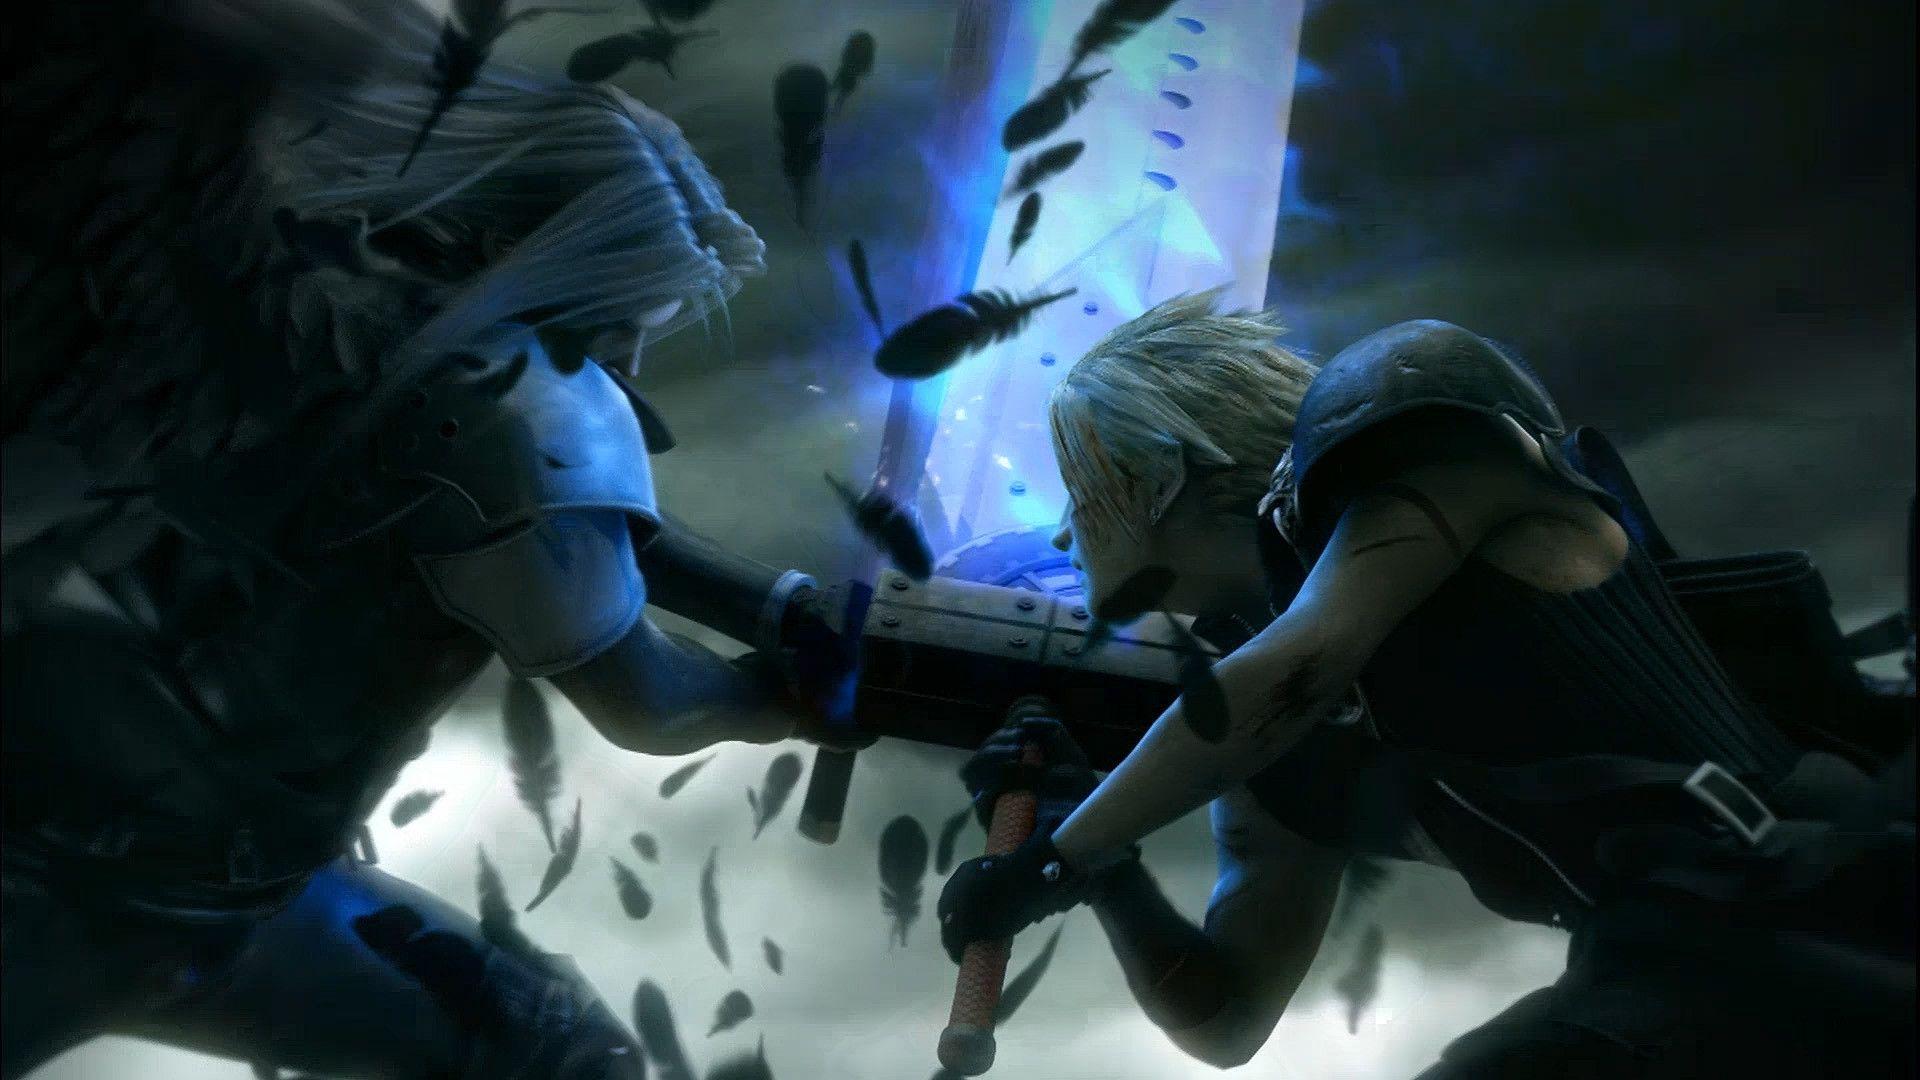 image For > Final Fantasy 7 Sephiroth Vs Cloud